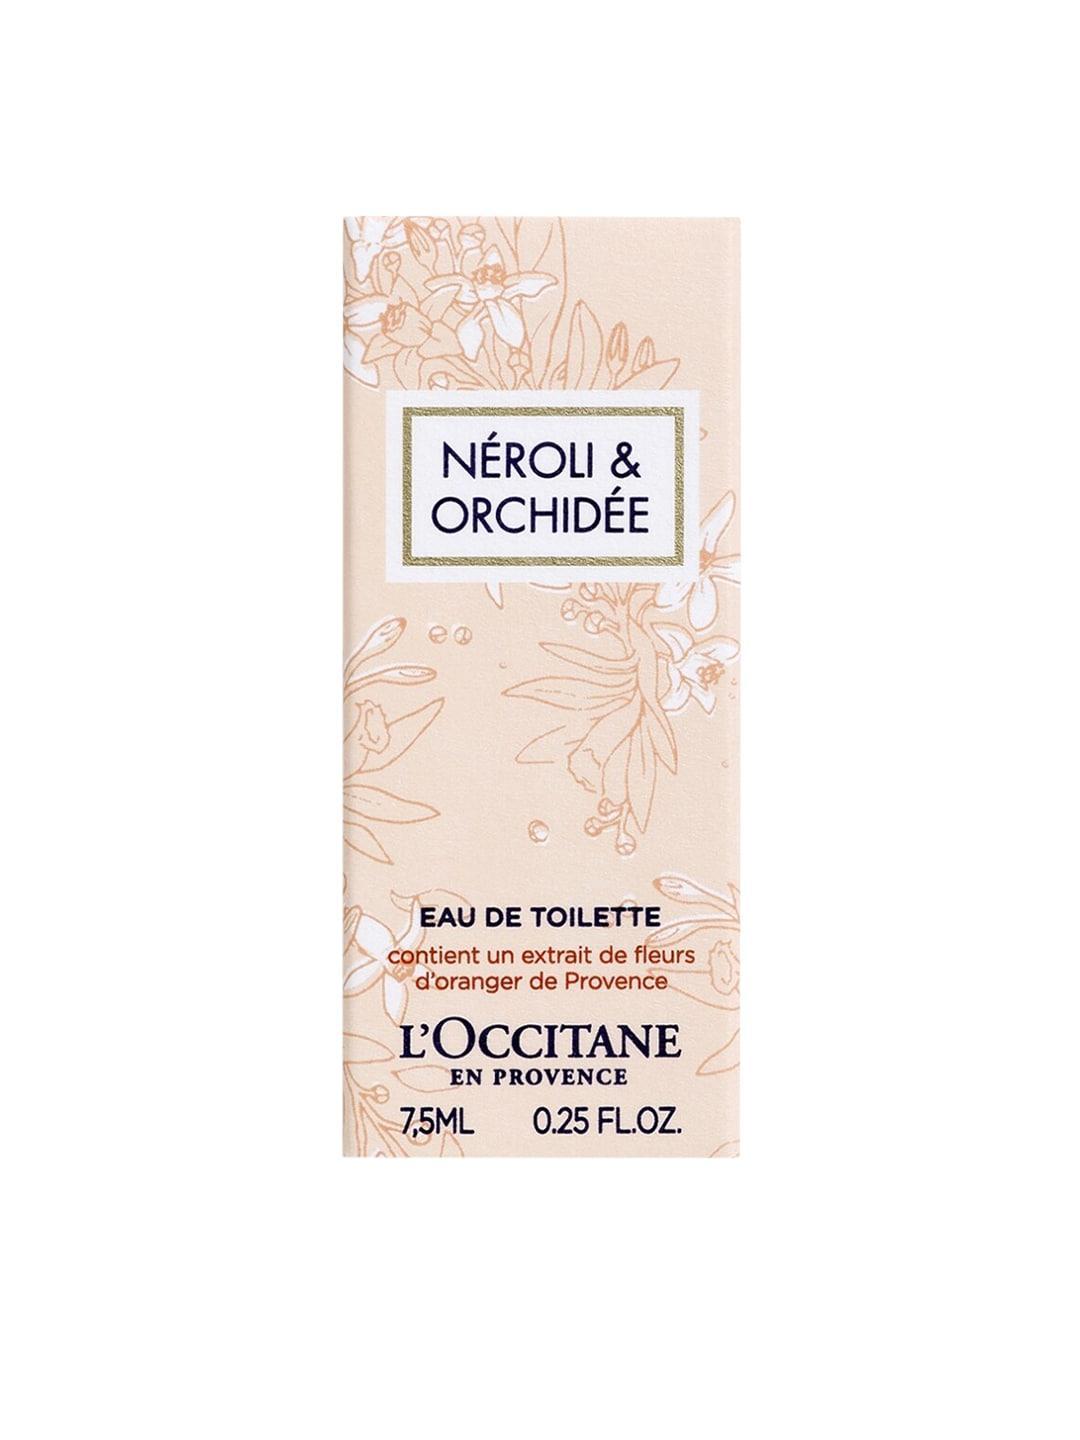 LOccitane en Provence Neroli & Orchidee Eau de Toilette - 7.5ml